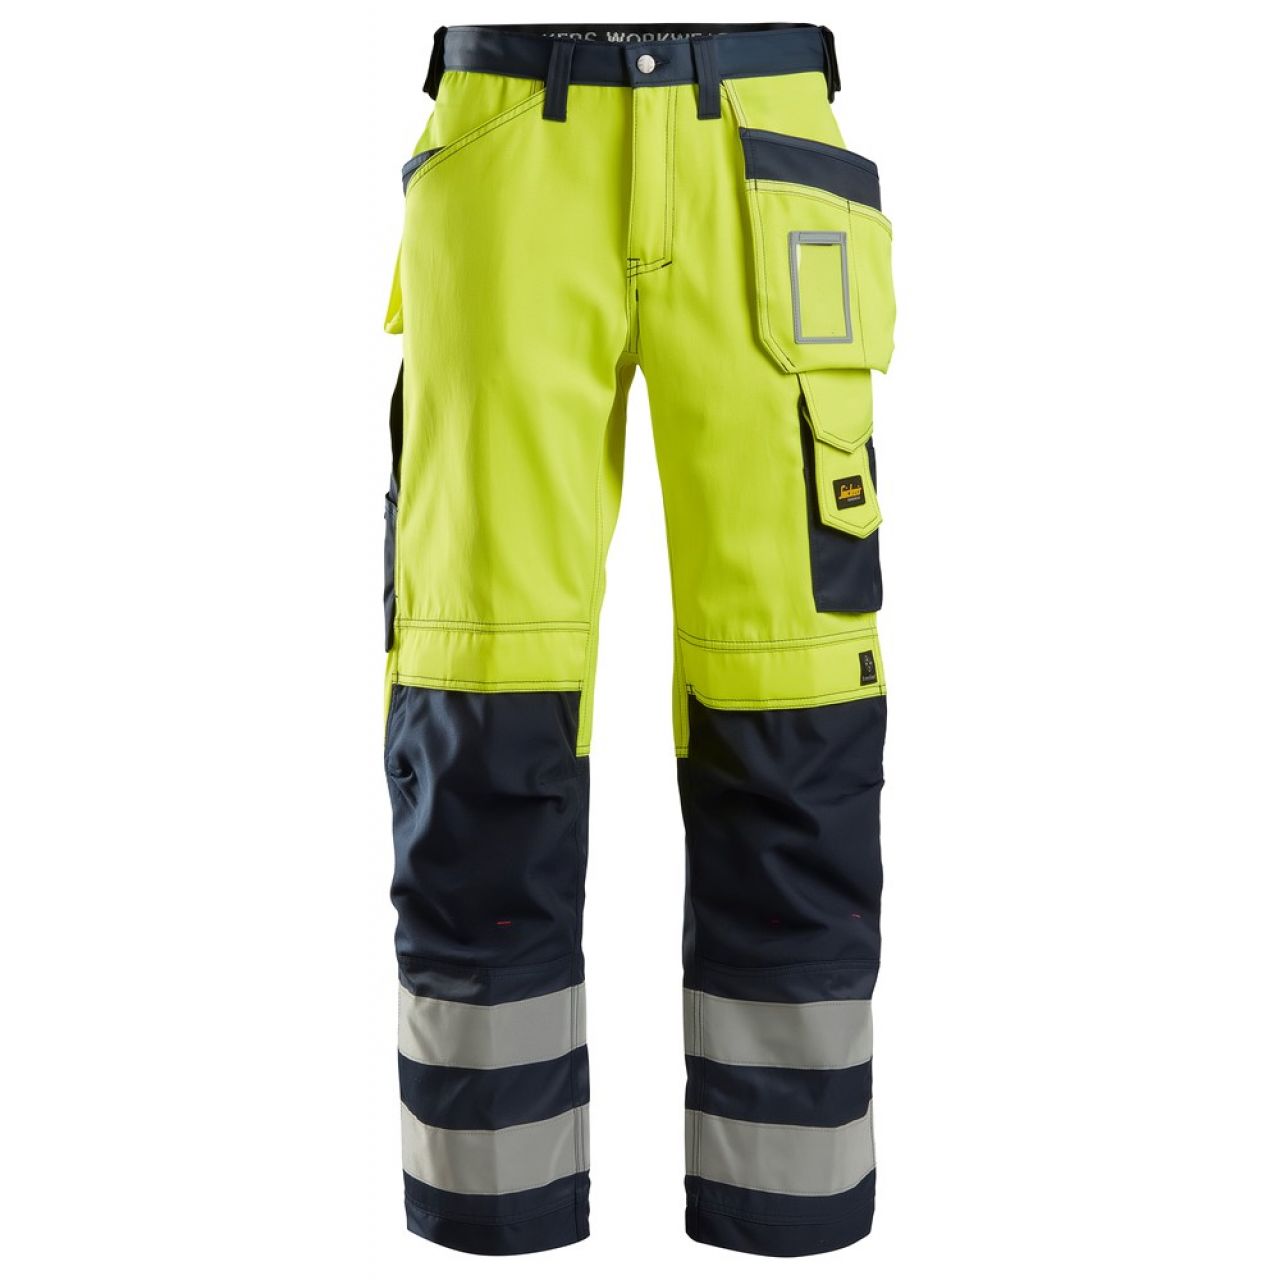 3233 Pantalones largos de trabajo de alta visibilidad clase 2 con bolsillos flotantes amarillo-azul marino talla 248